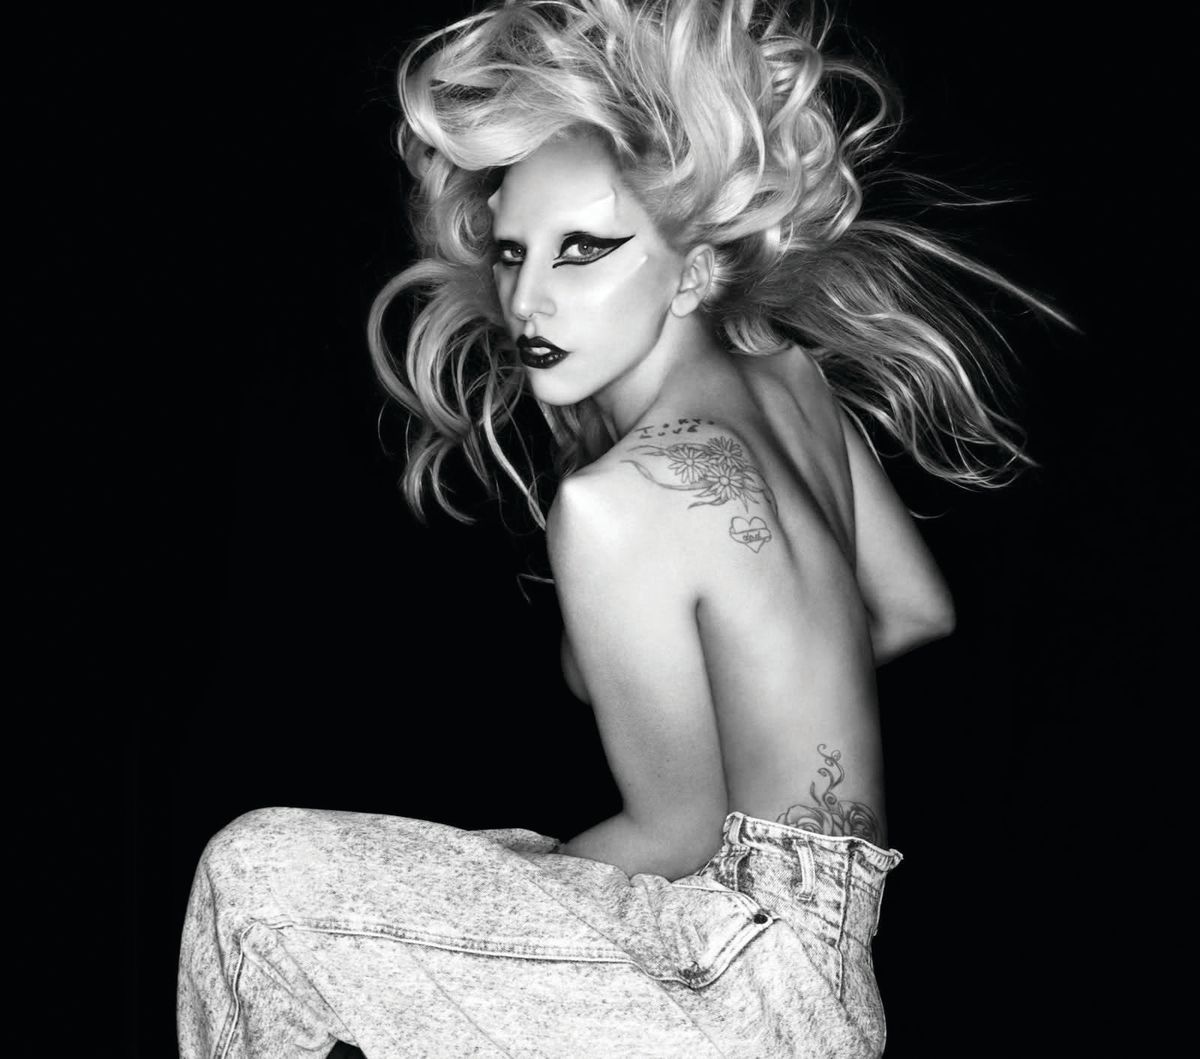 Lady Gaga - Iconic Pop Singer Superstar